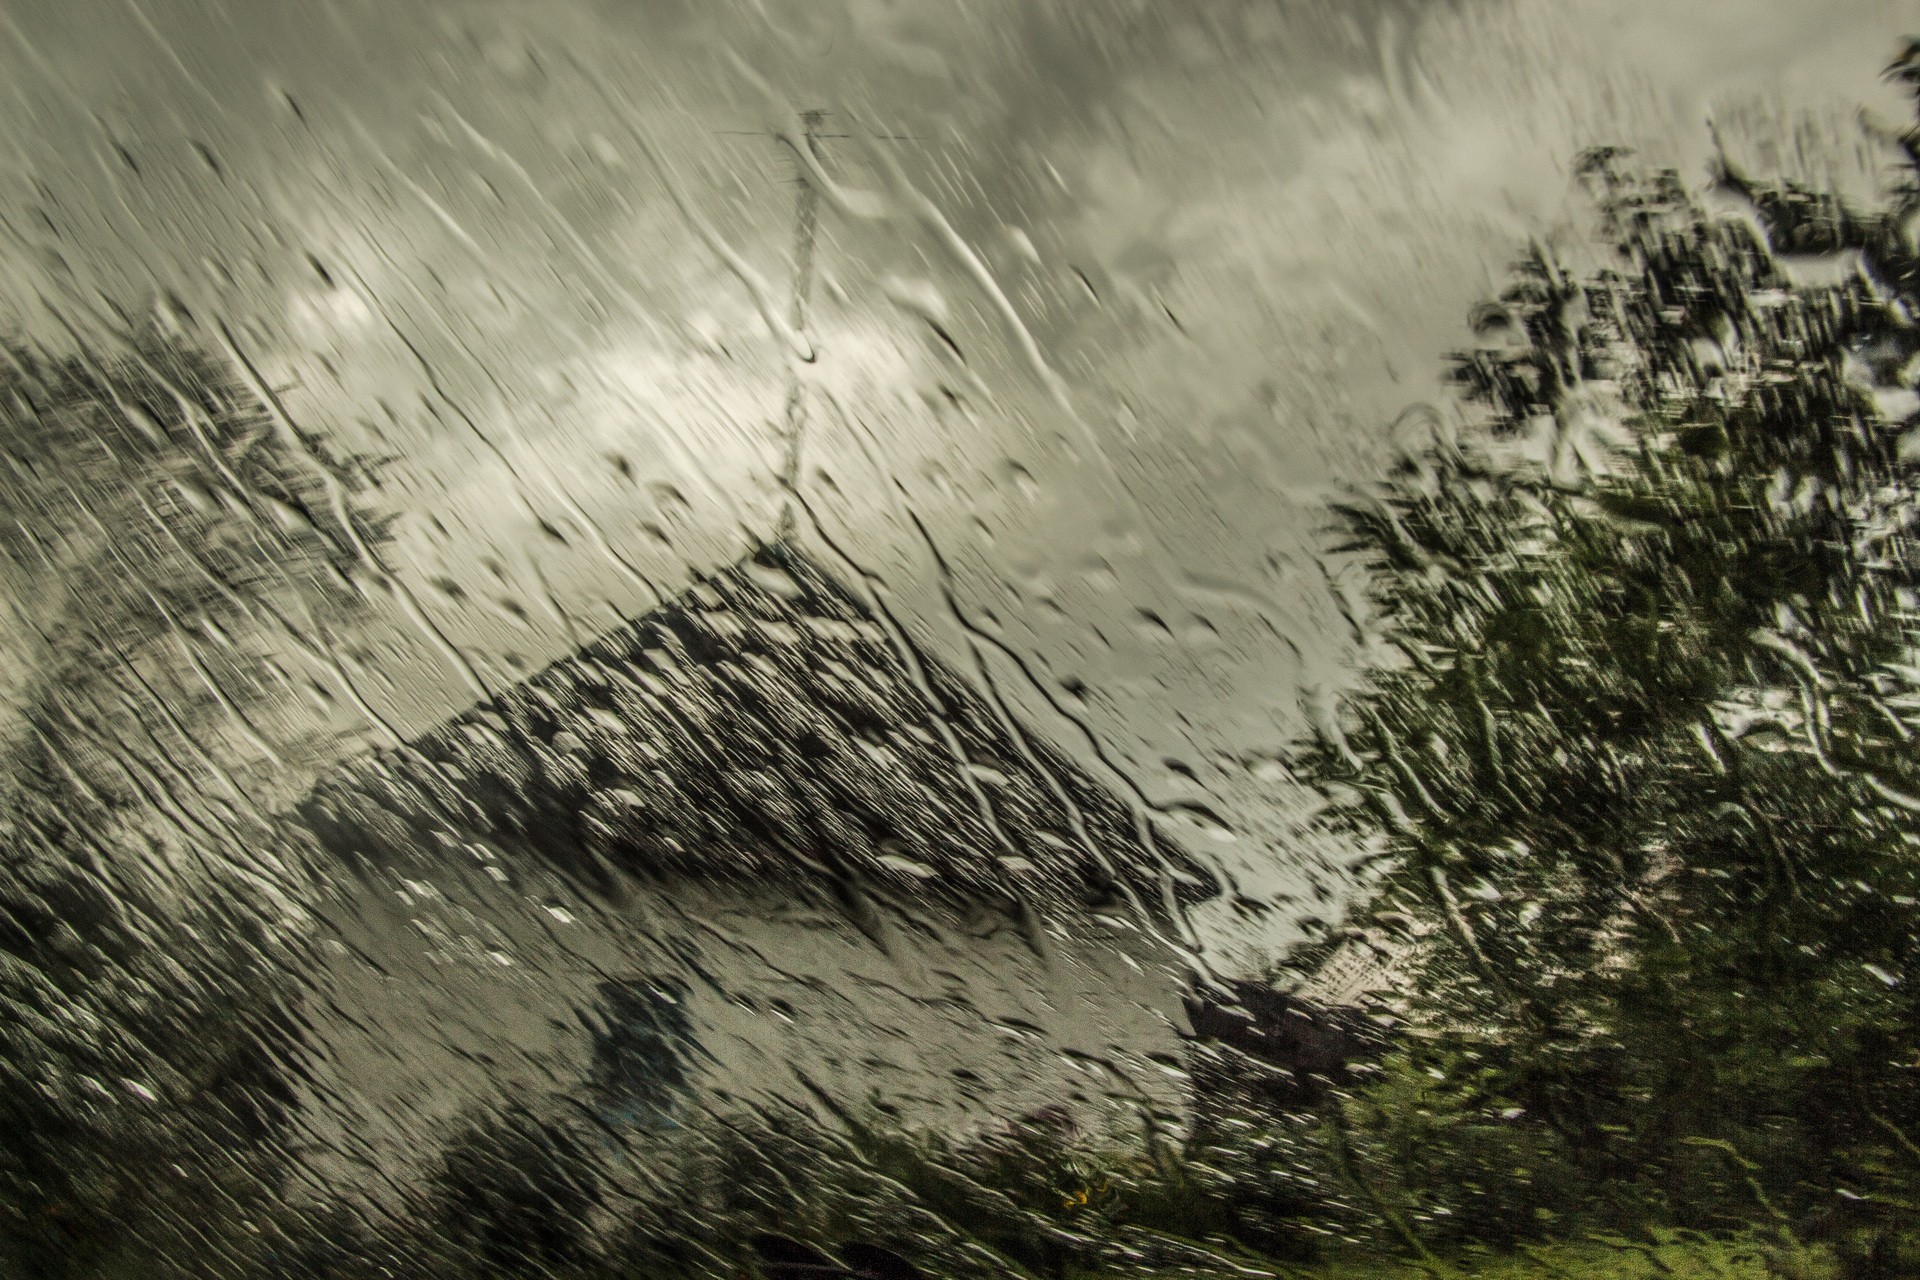 Дождь в деревне. Дождливая деревня. Дождь в деревне картинки. Дождь деревня колготки.